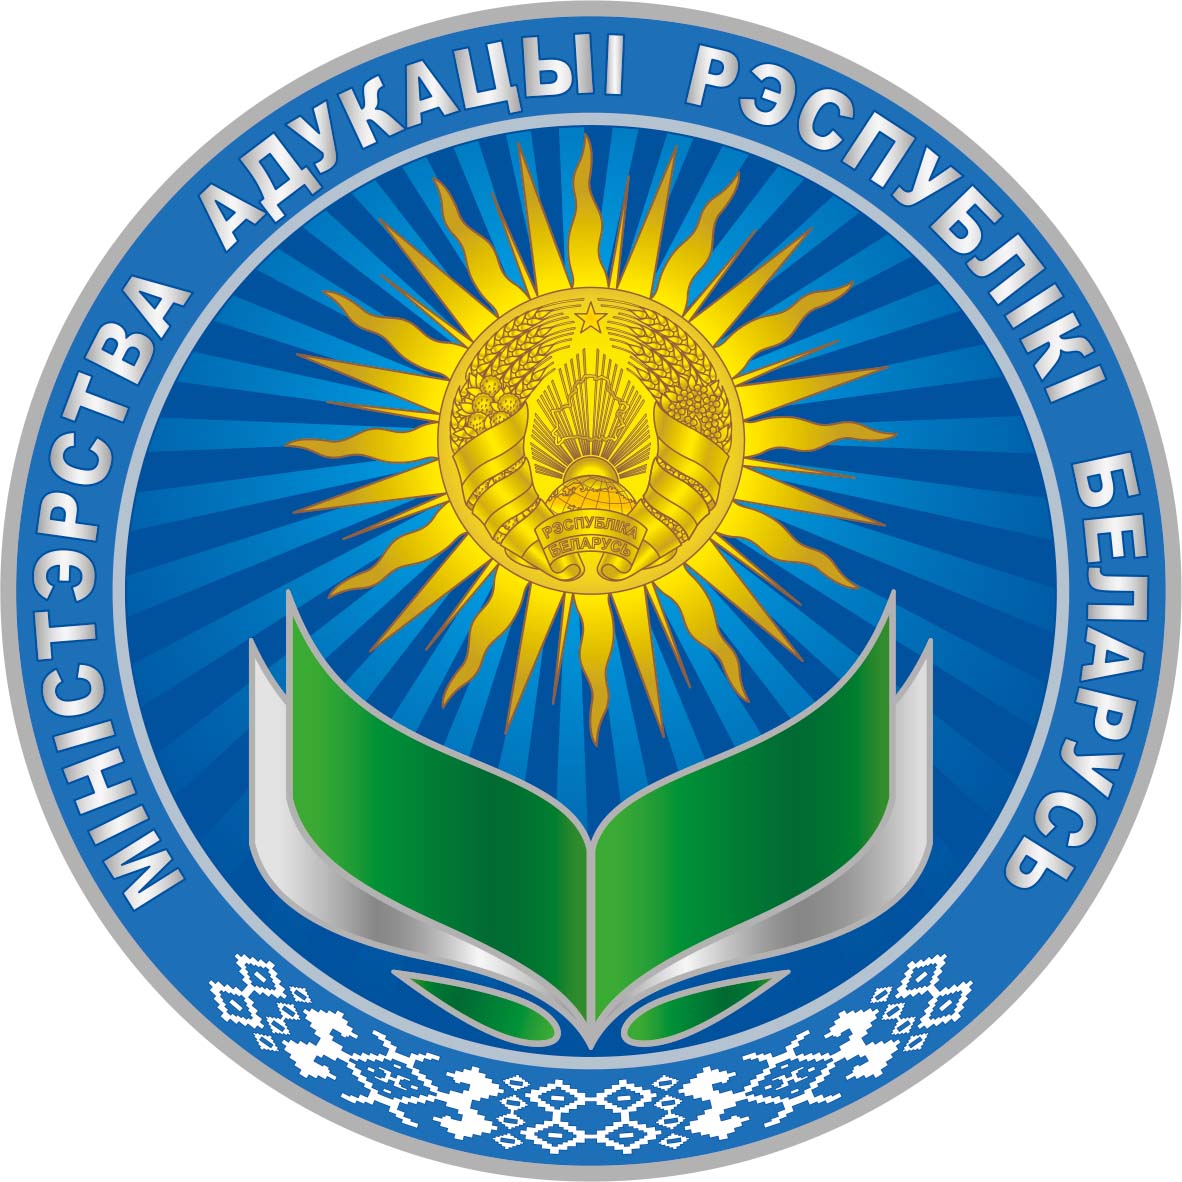 ministry-logo